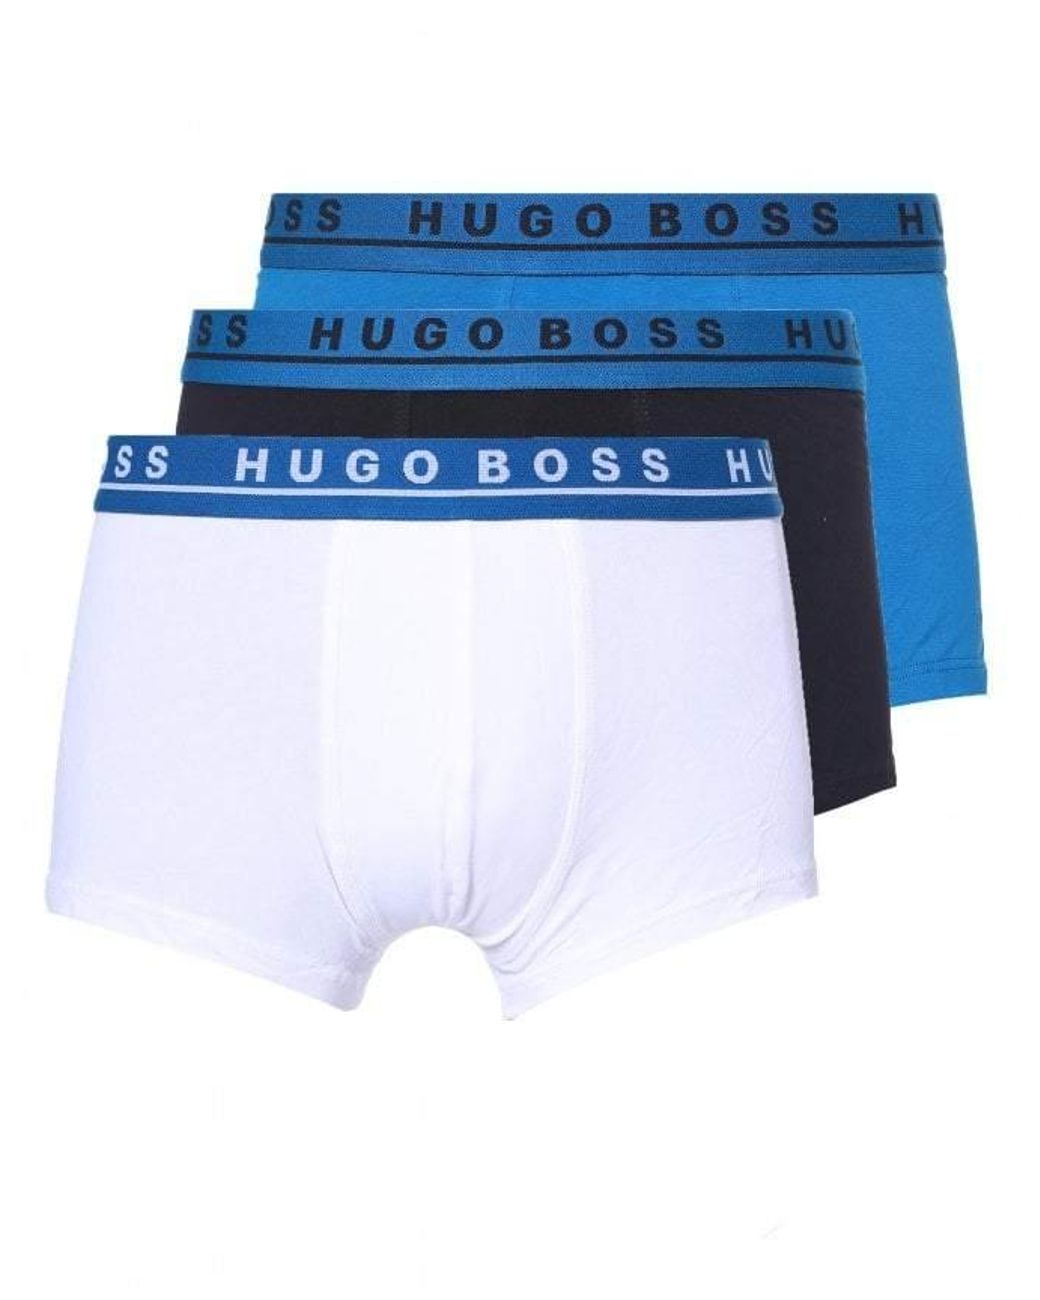 Hugo Boss Mens 3-Pack Cotton Stretch Trunks